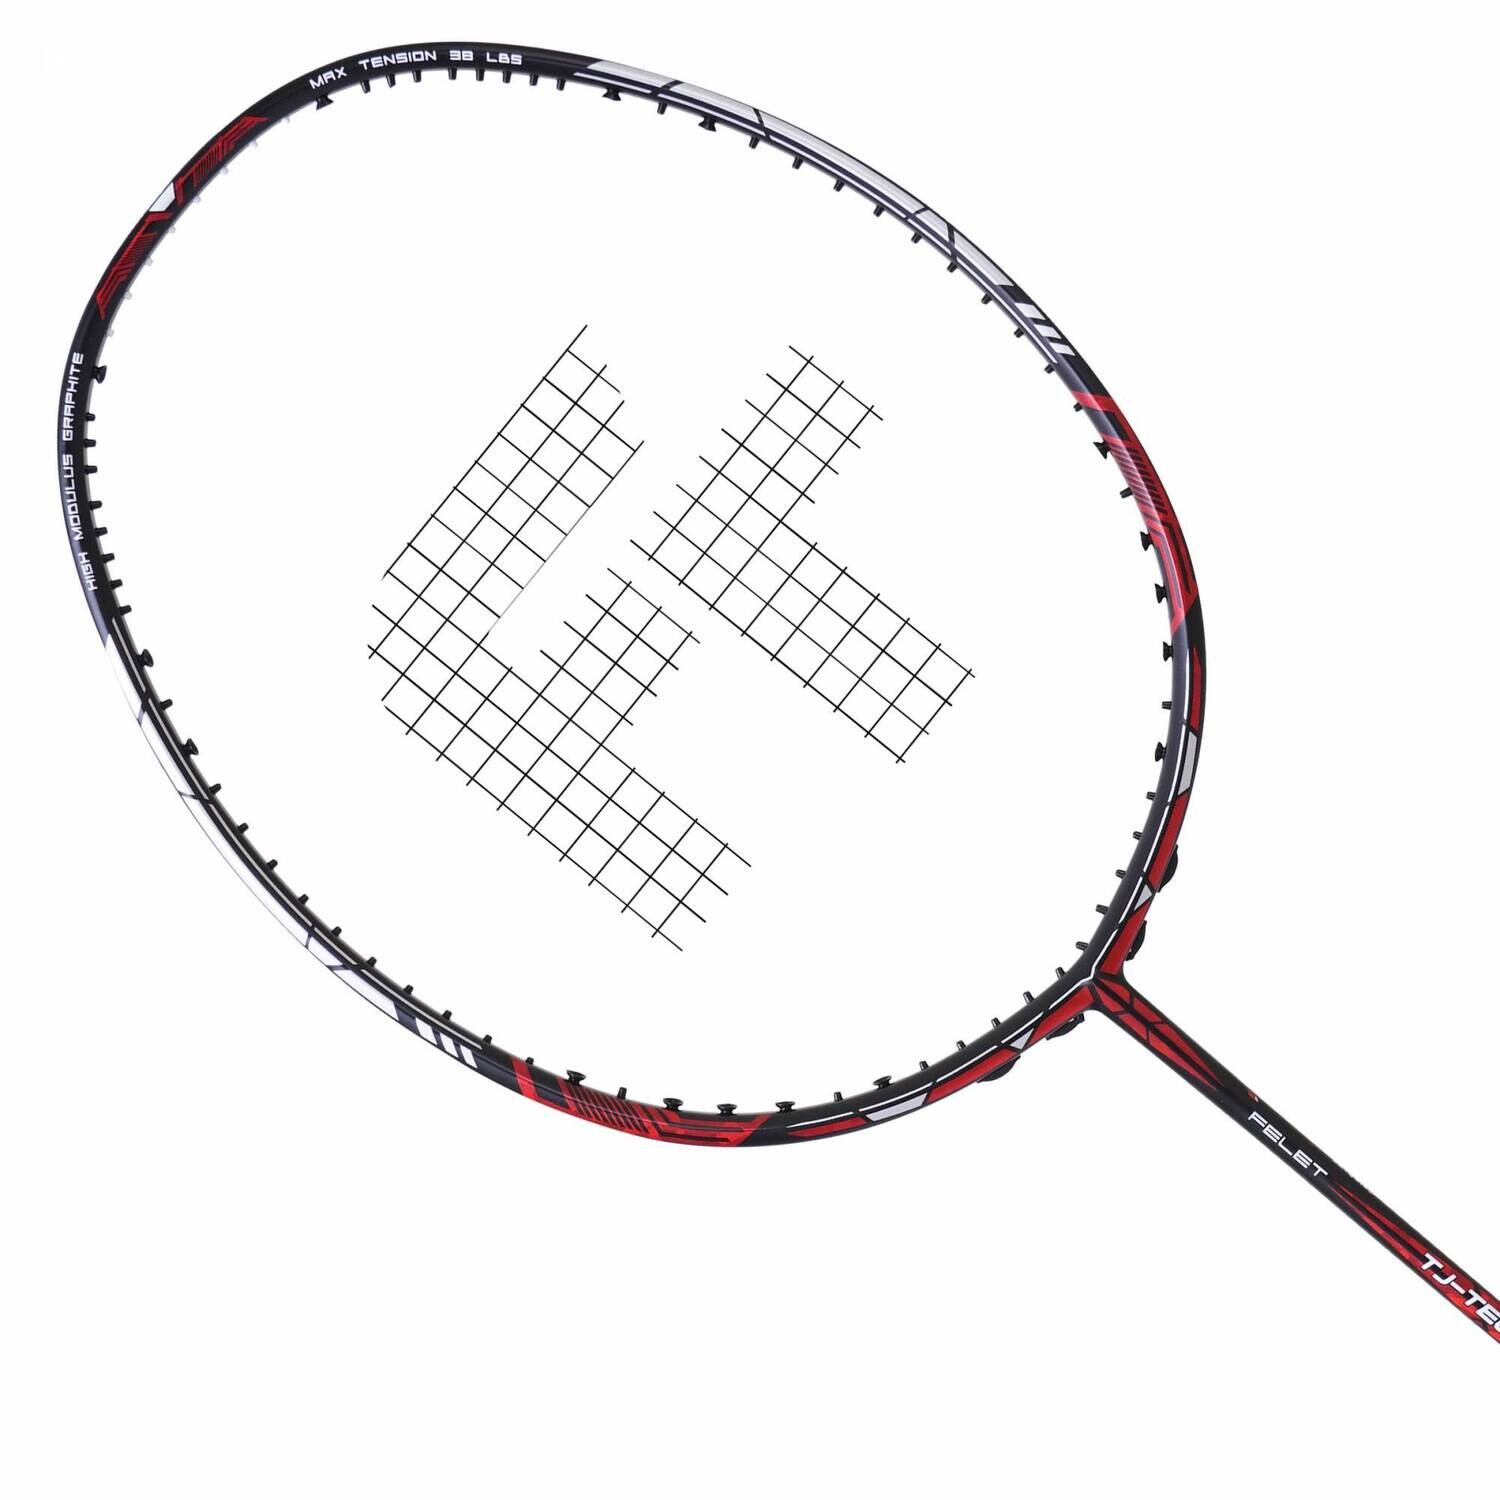 Felet TJ- TECH RAYTHEON 8 Professional Badminton Racquet